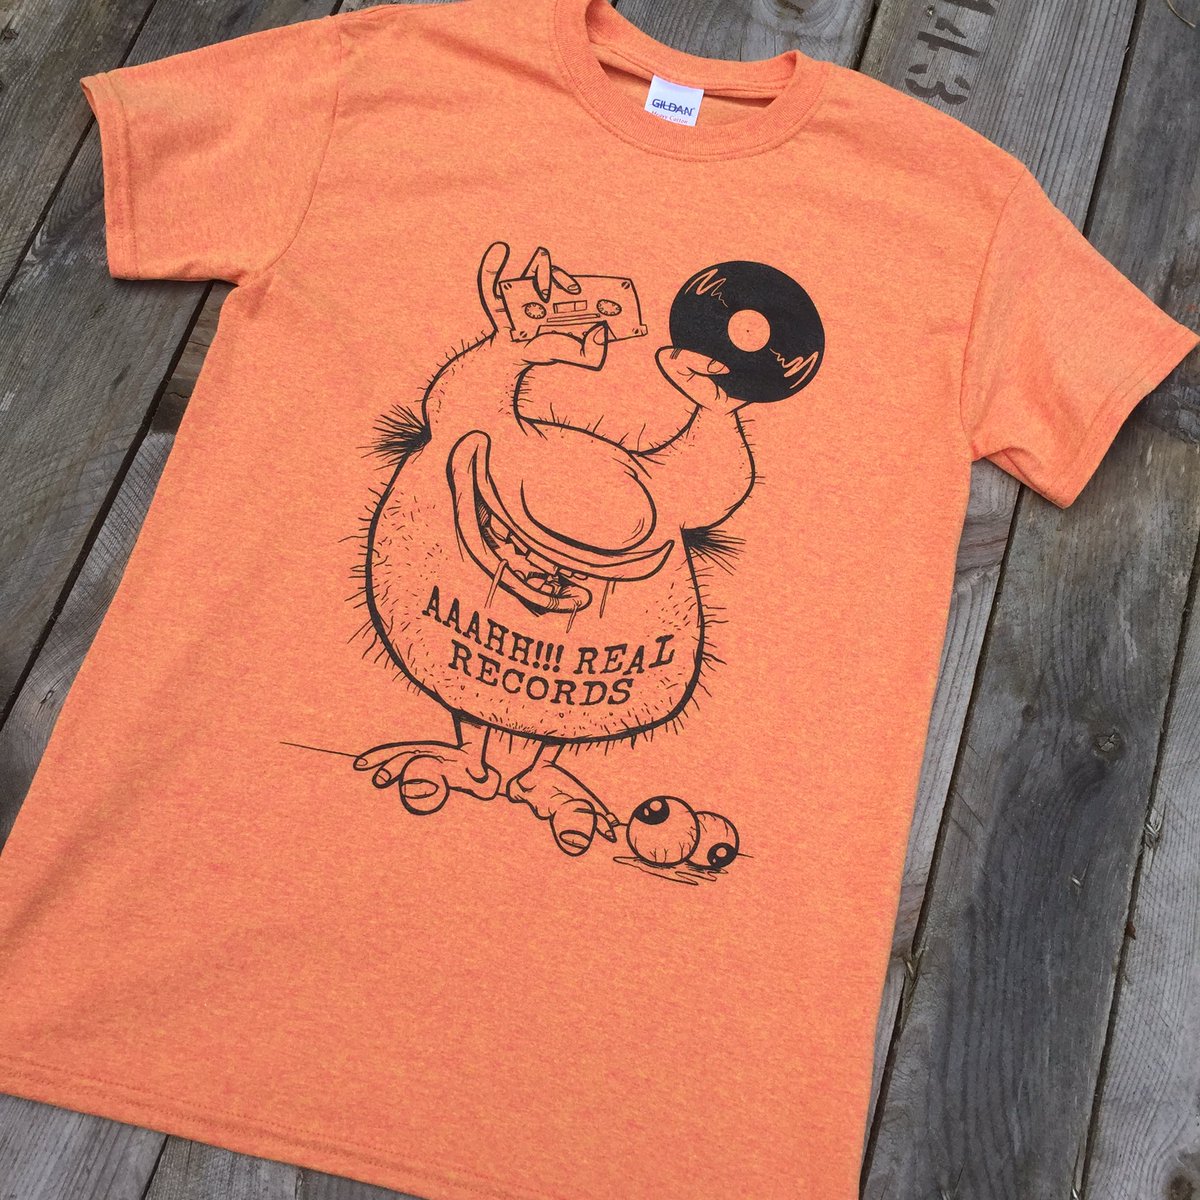 #aaahhrealrecords on sunset orange shirts
**For custom printing enquiries DM or 📧 ouroboros.printing@gmail.com**